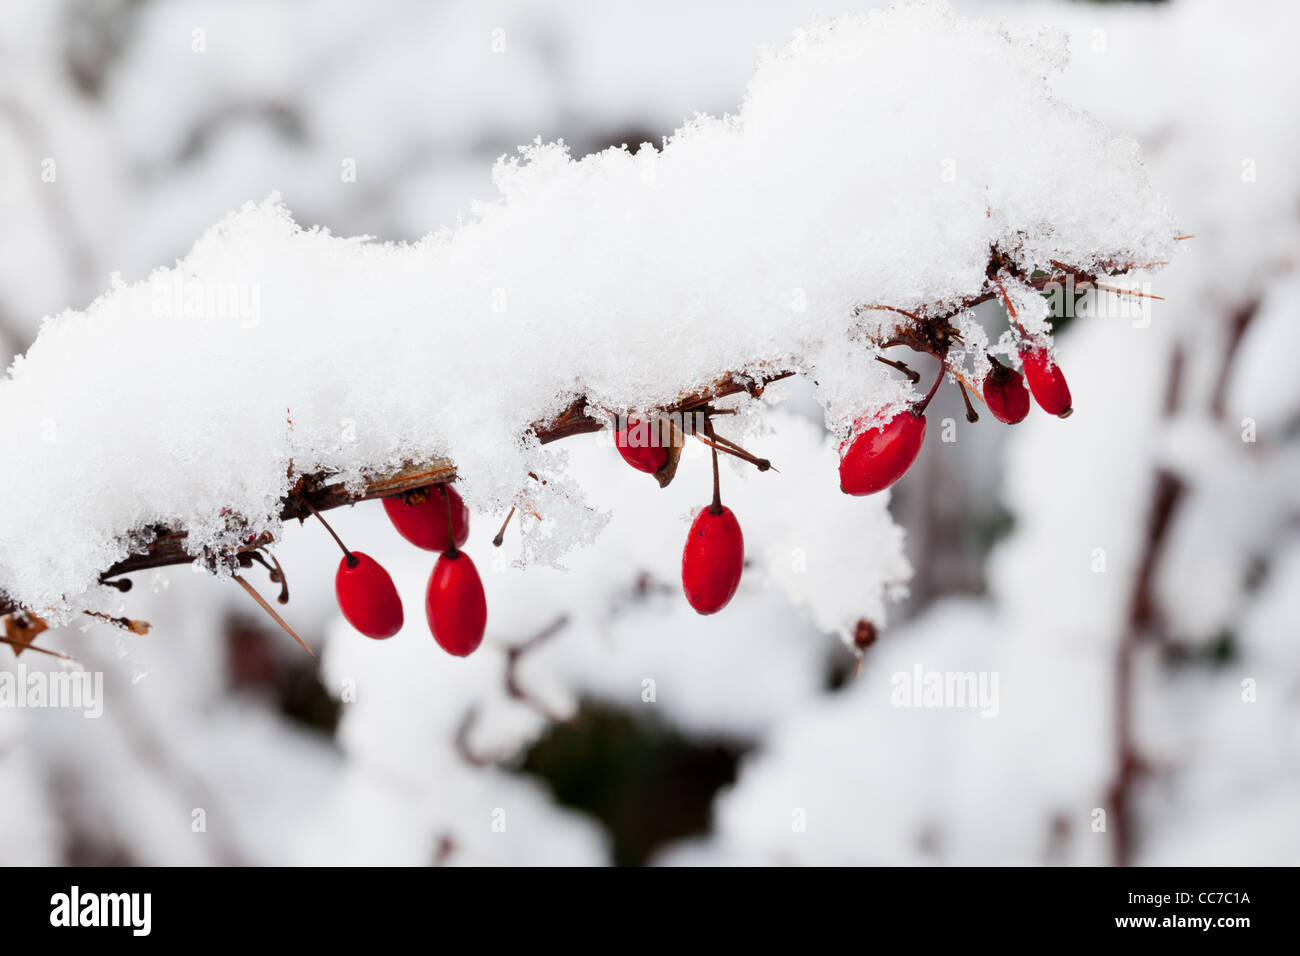 Red berberis berries covered in snow Stock Photo